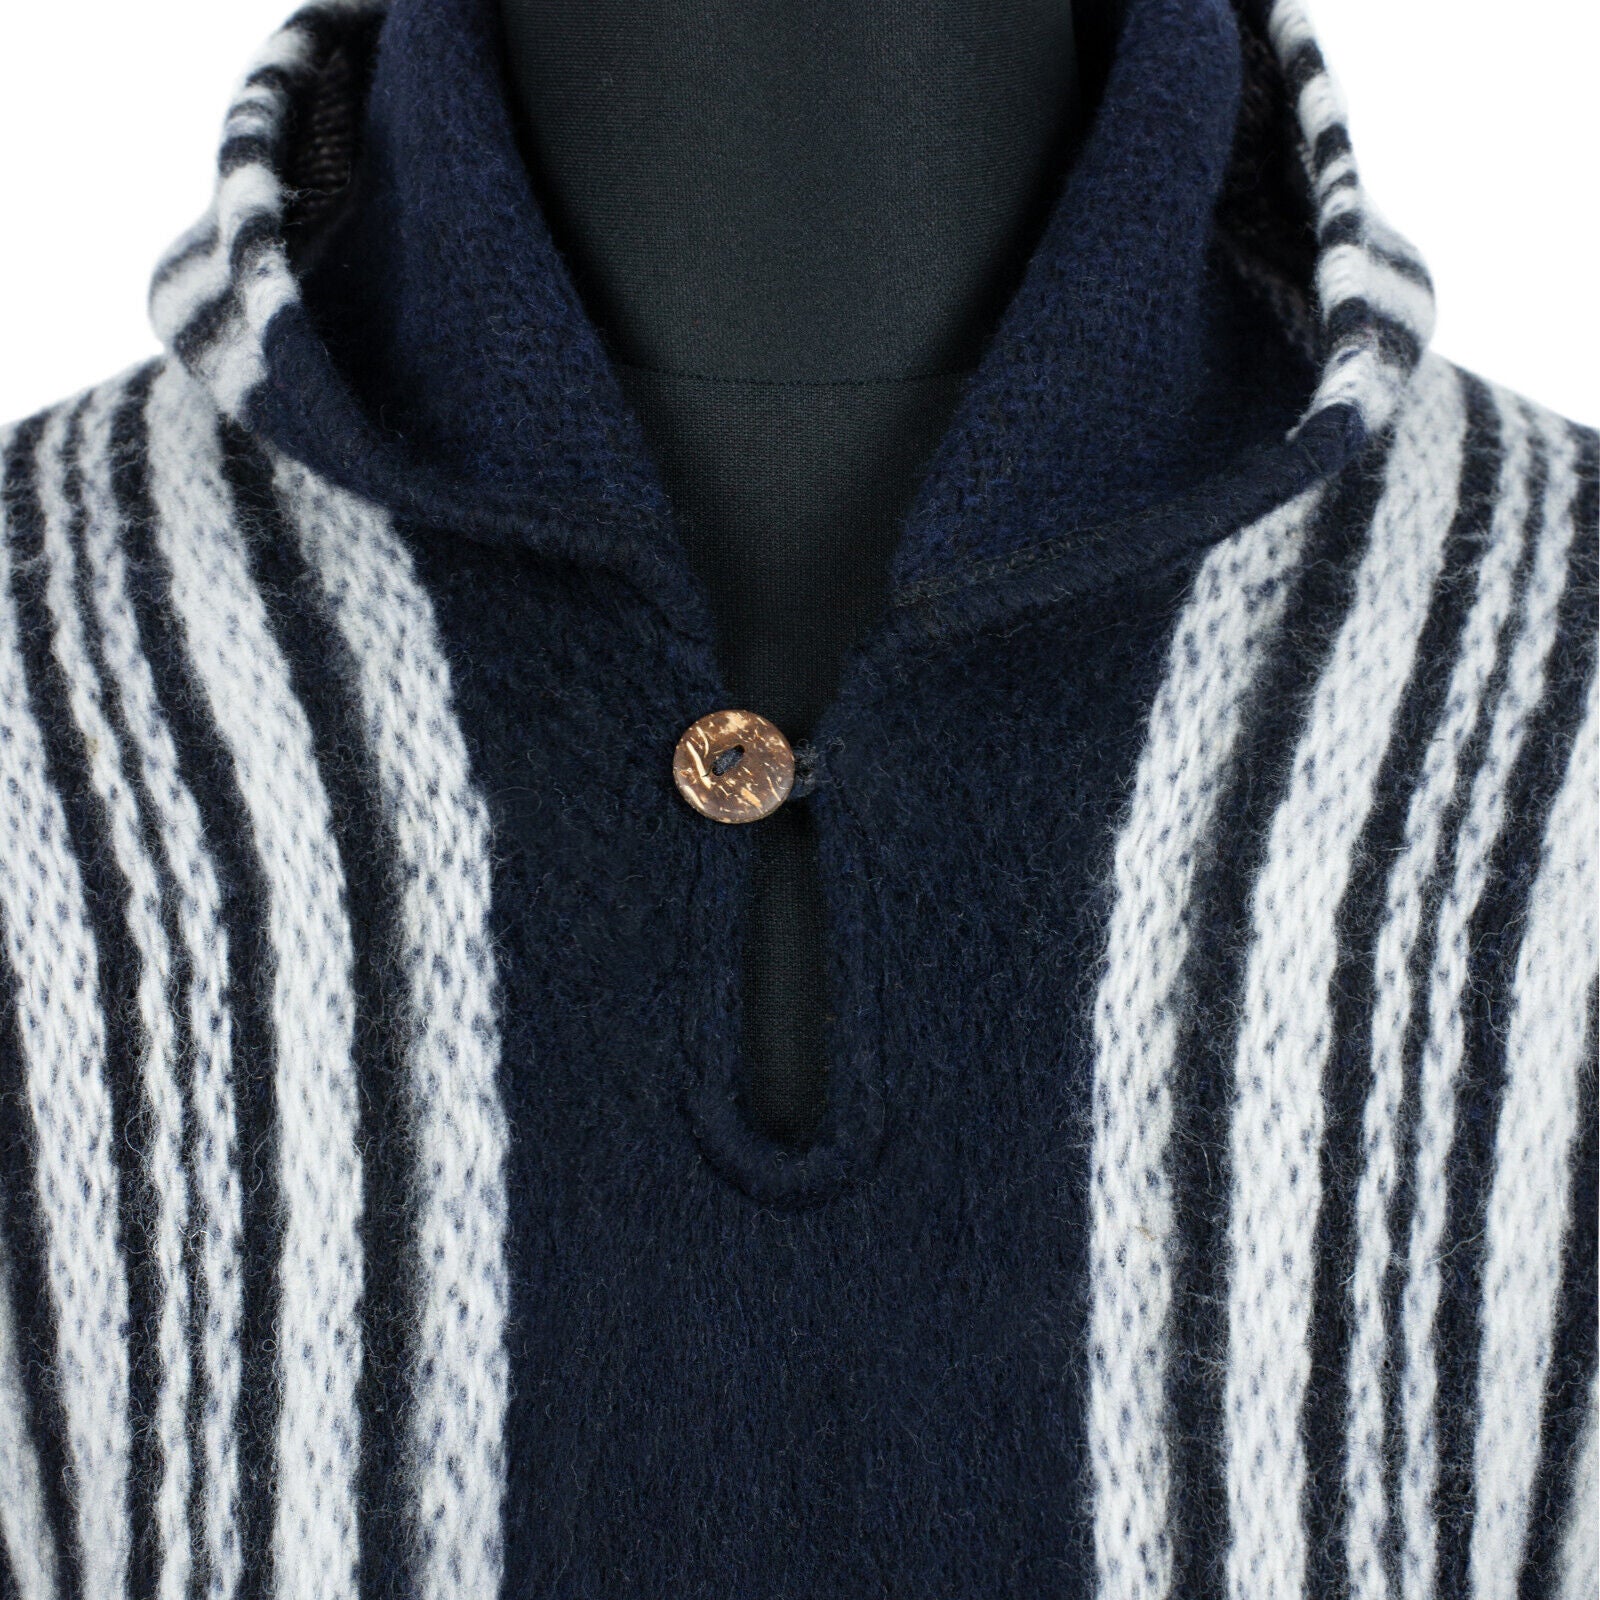 Tarume - Llama Wool Unisex South American Handwoven Hooded Poncho - midnight blue striped pattern